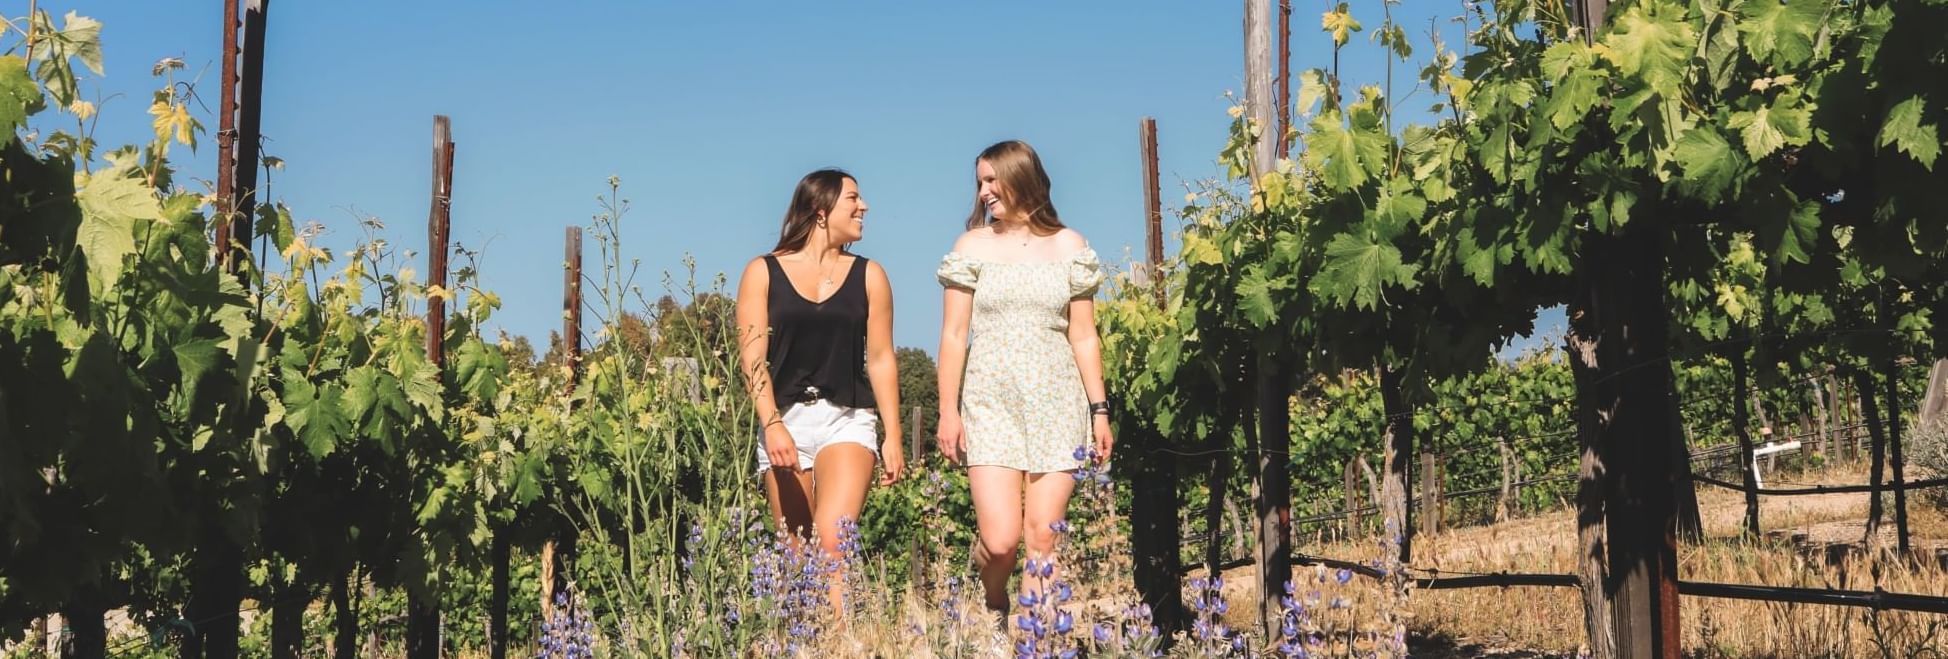 Two women walking through a vineyard looking face to face